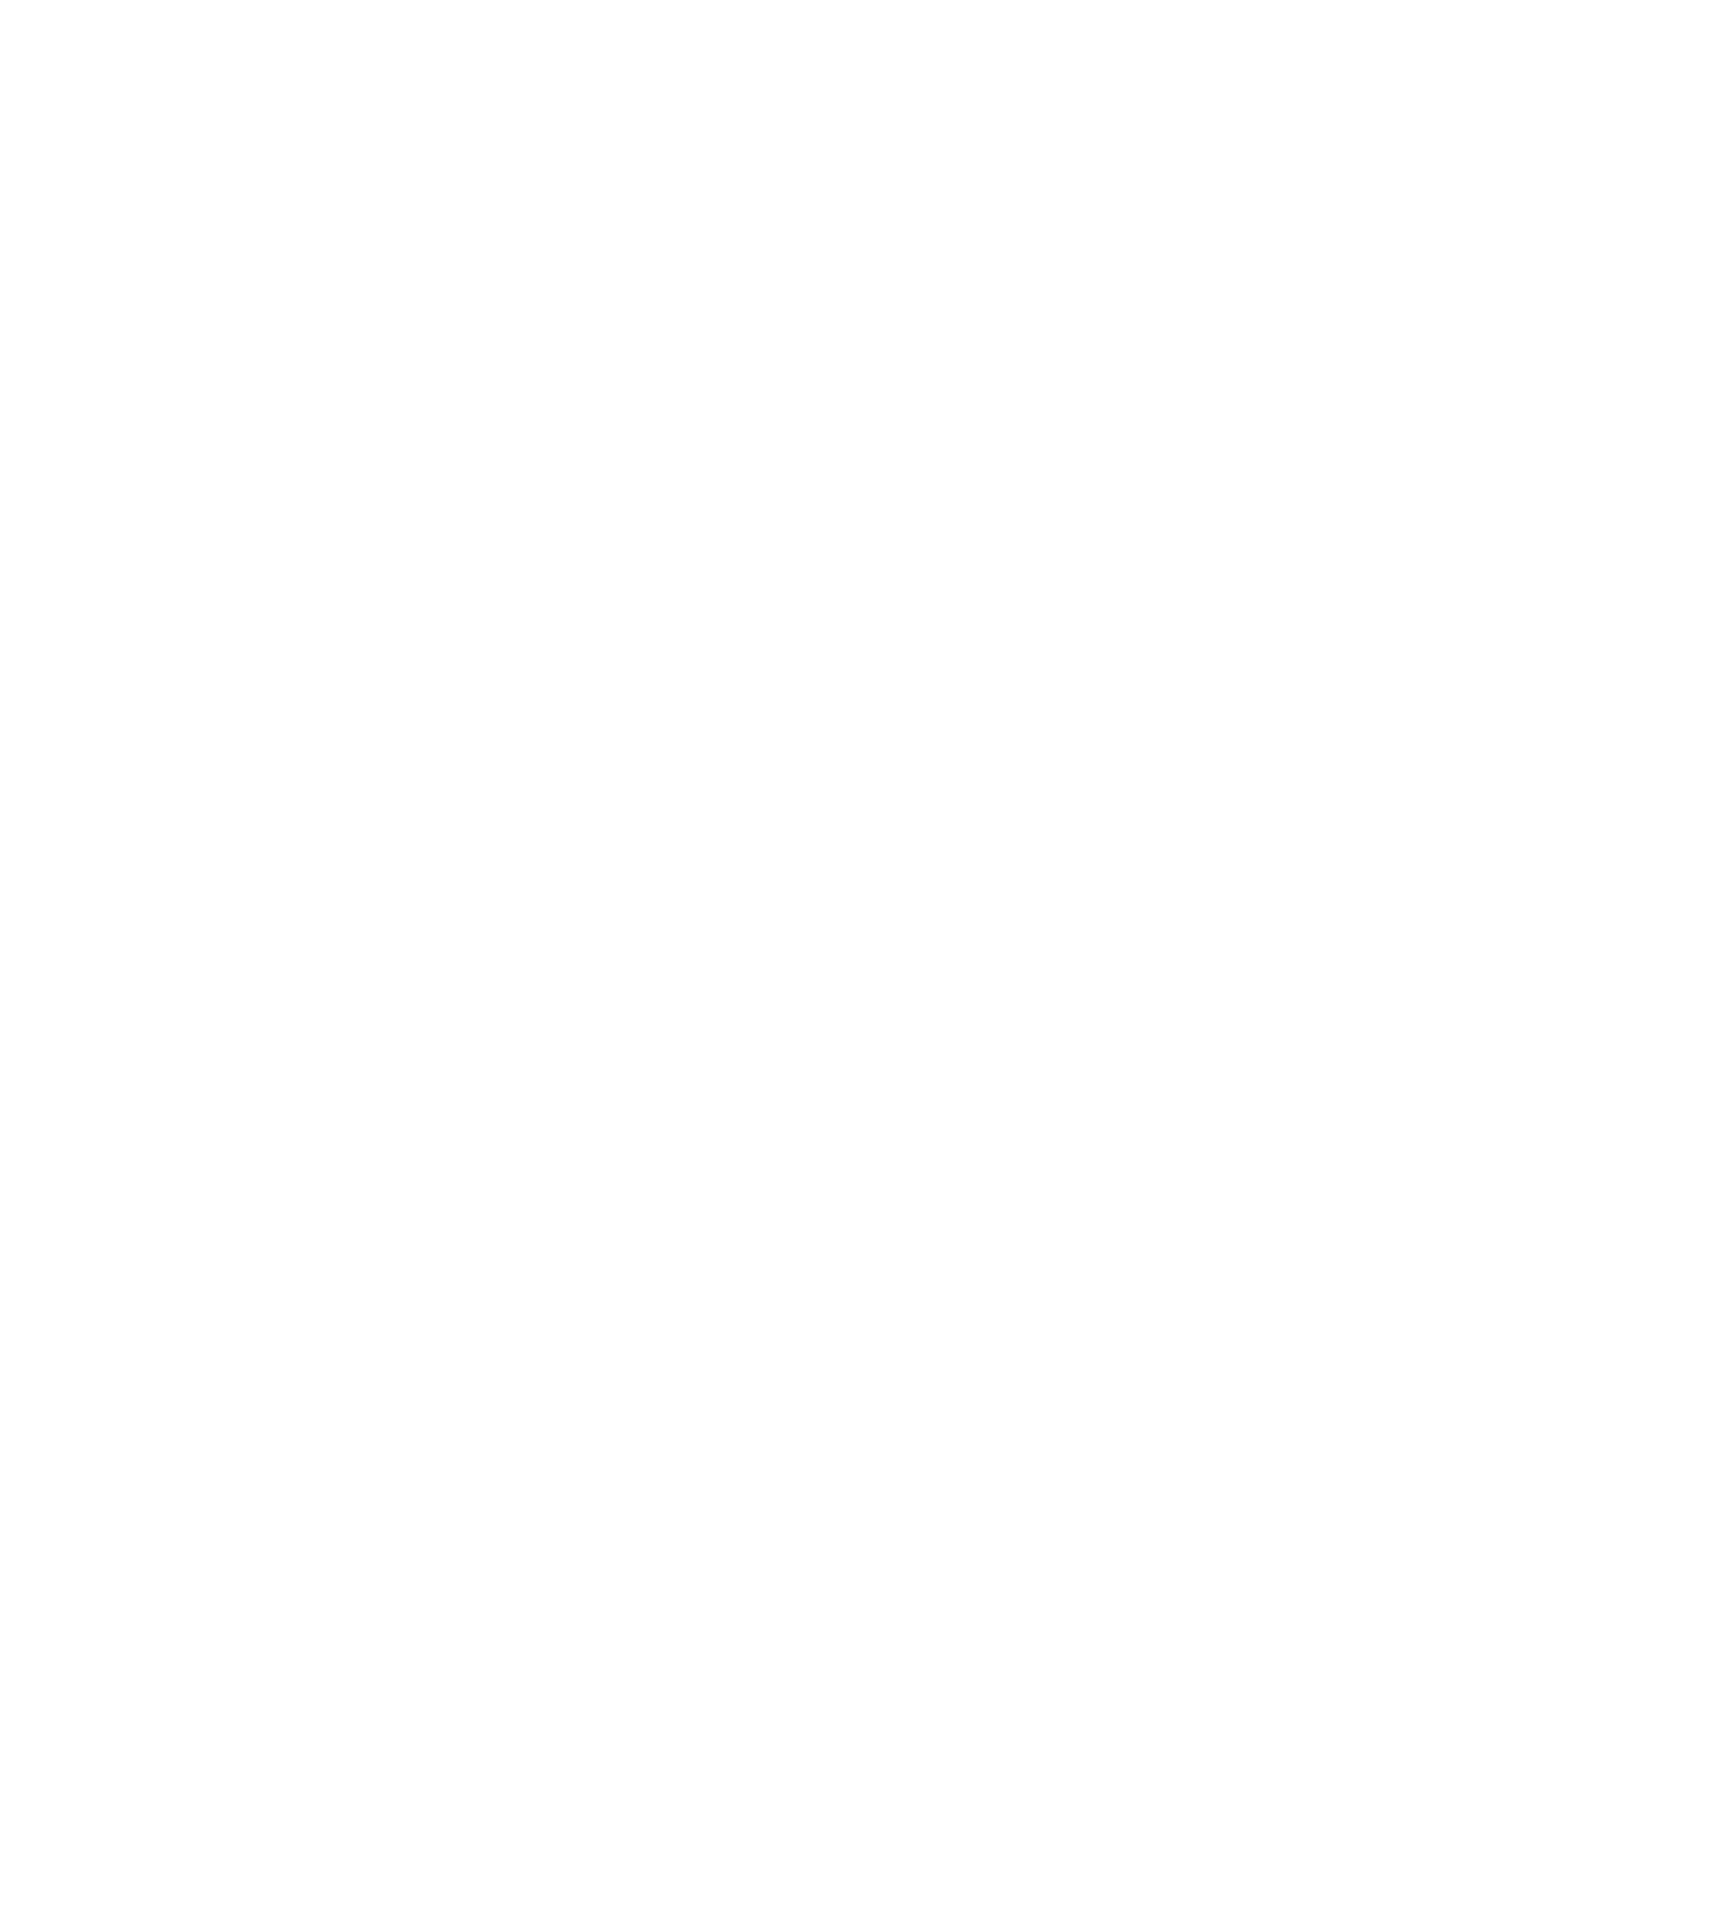 Odyssée Rive Gauche / SKYLAB - Montpellier - Port Marianne - 34 - Immobilier neuf